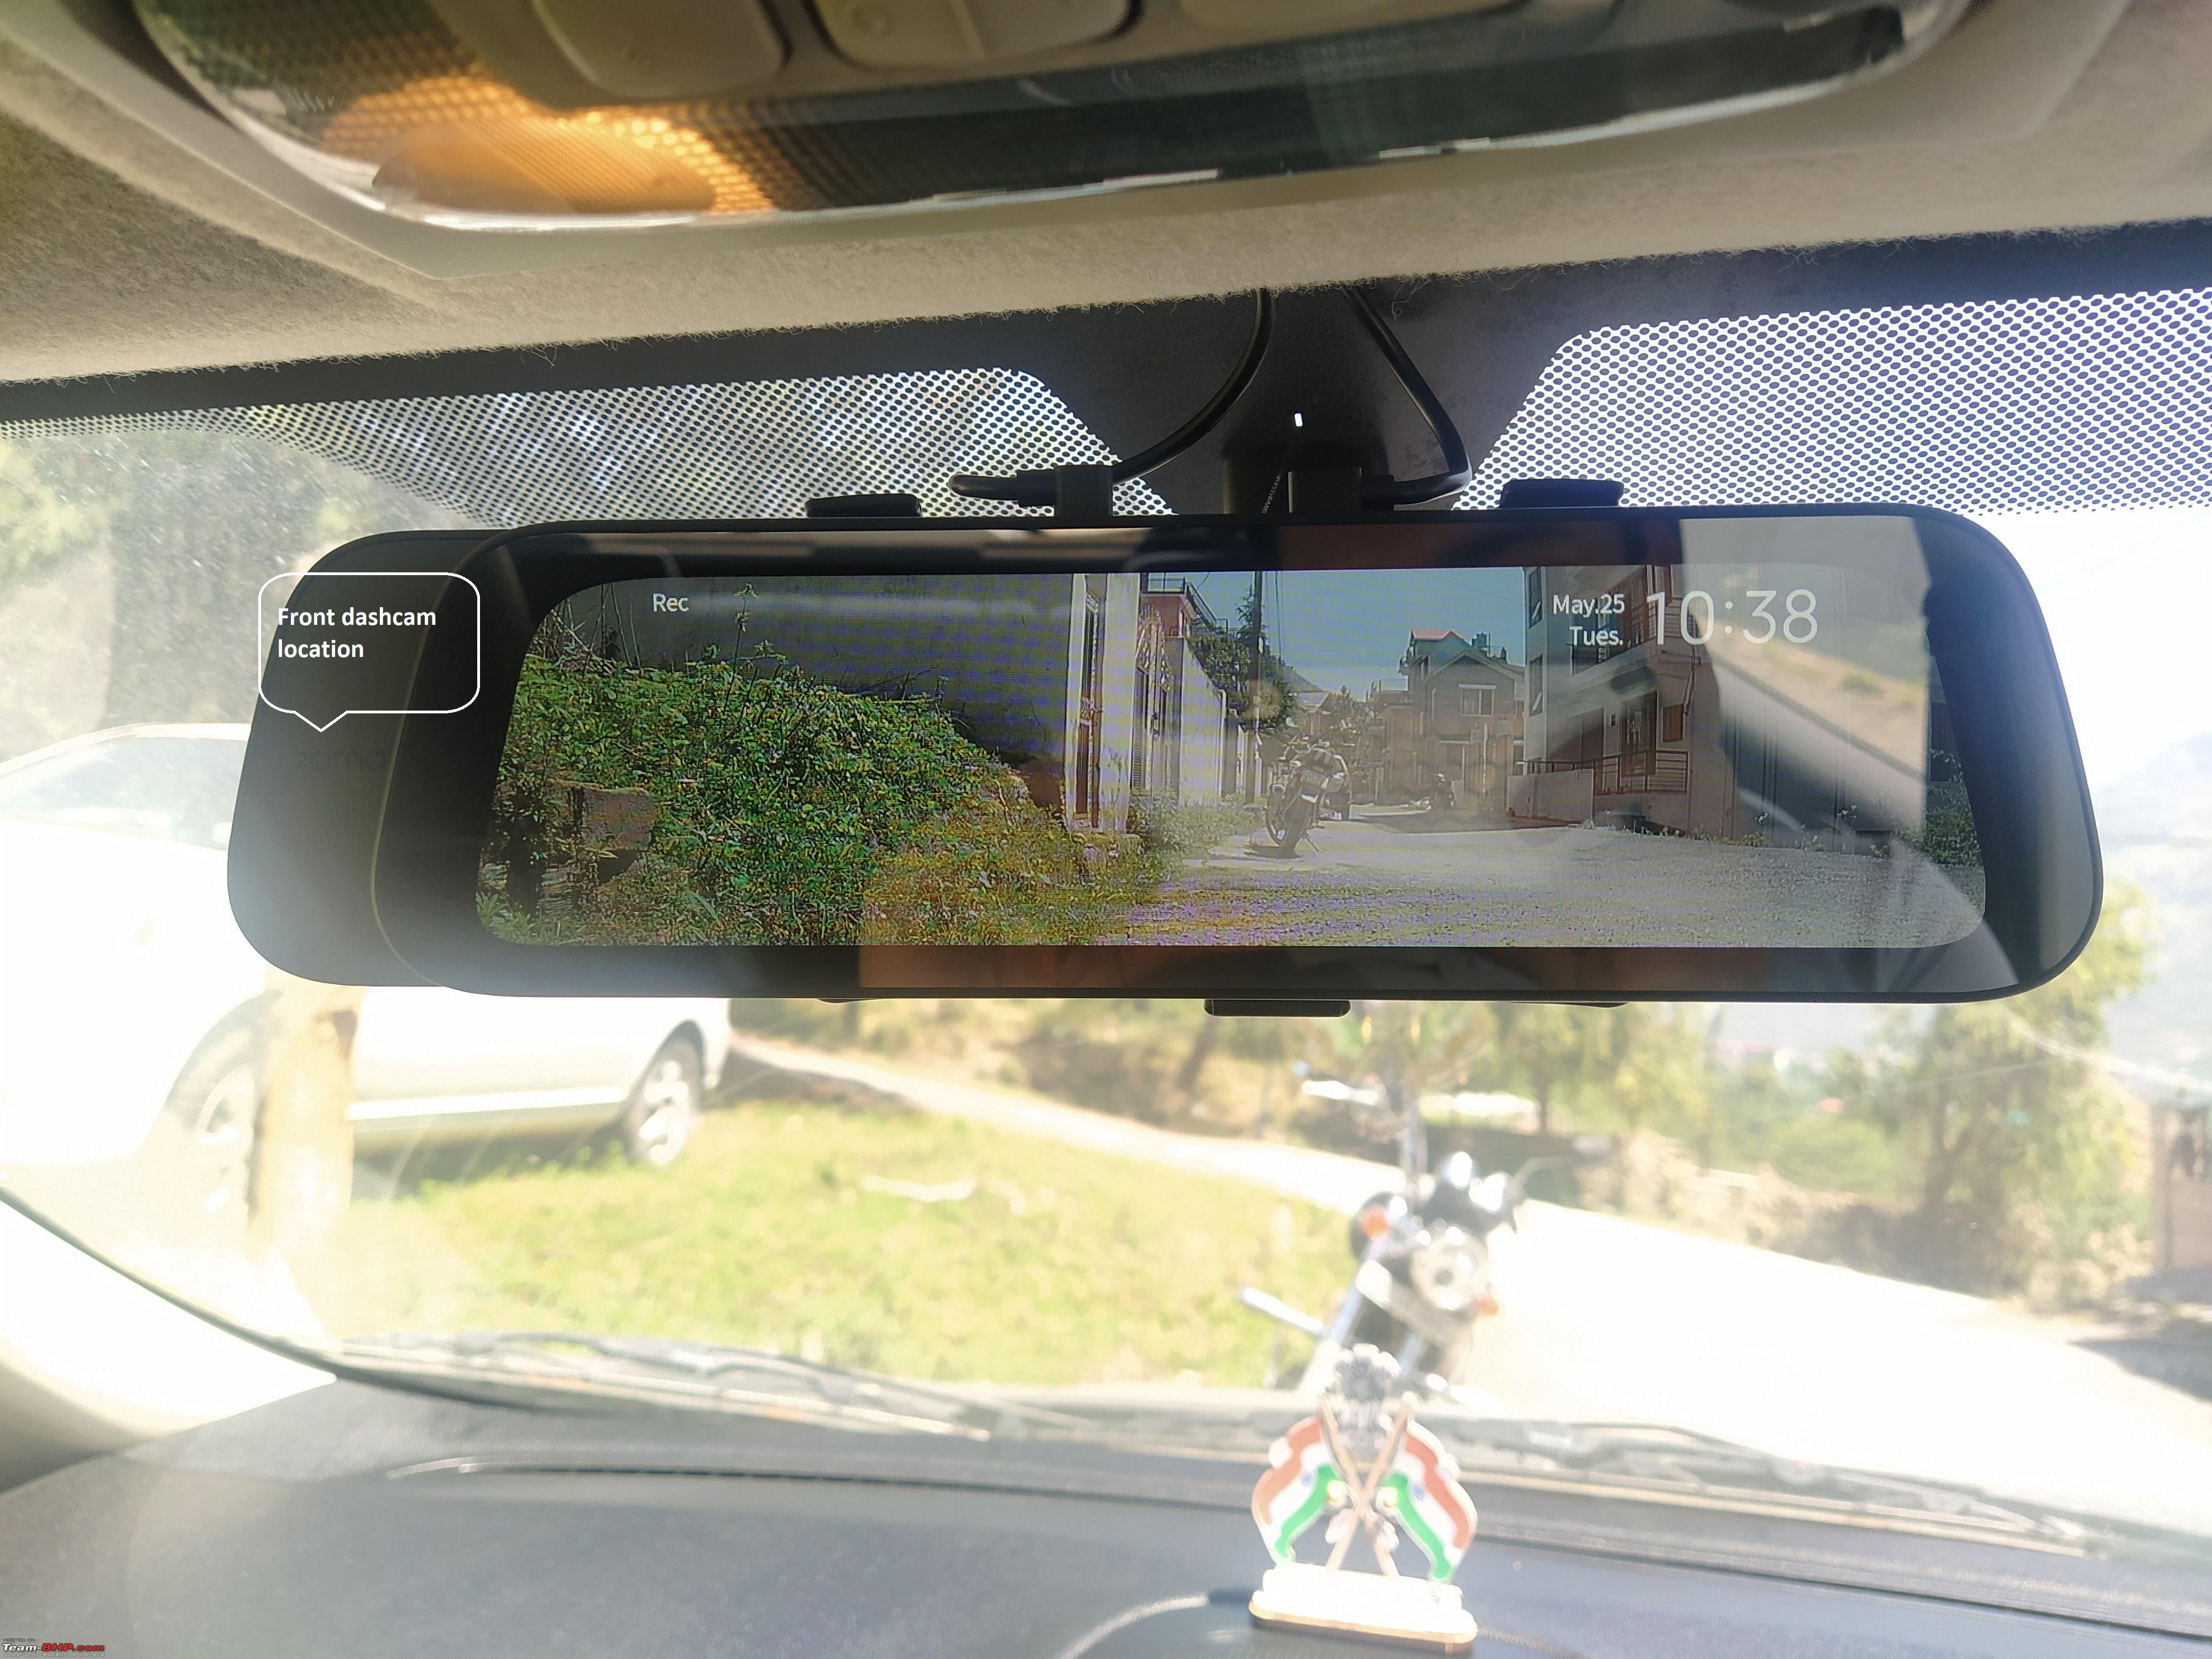 https://www.team-bhp.com/forum/attachments/diy-do-yourself/2160877d1622025998-d-i-y-installation-rearview-dashcam-night-vision-rear-cam-dual-channel-dashcam-rear-view.jpg